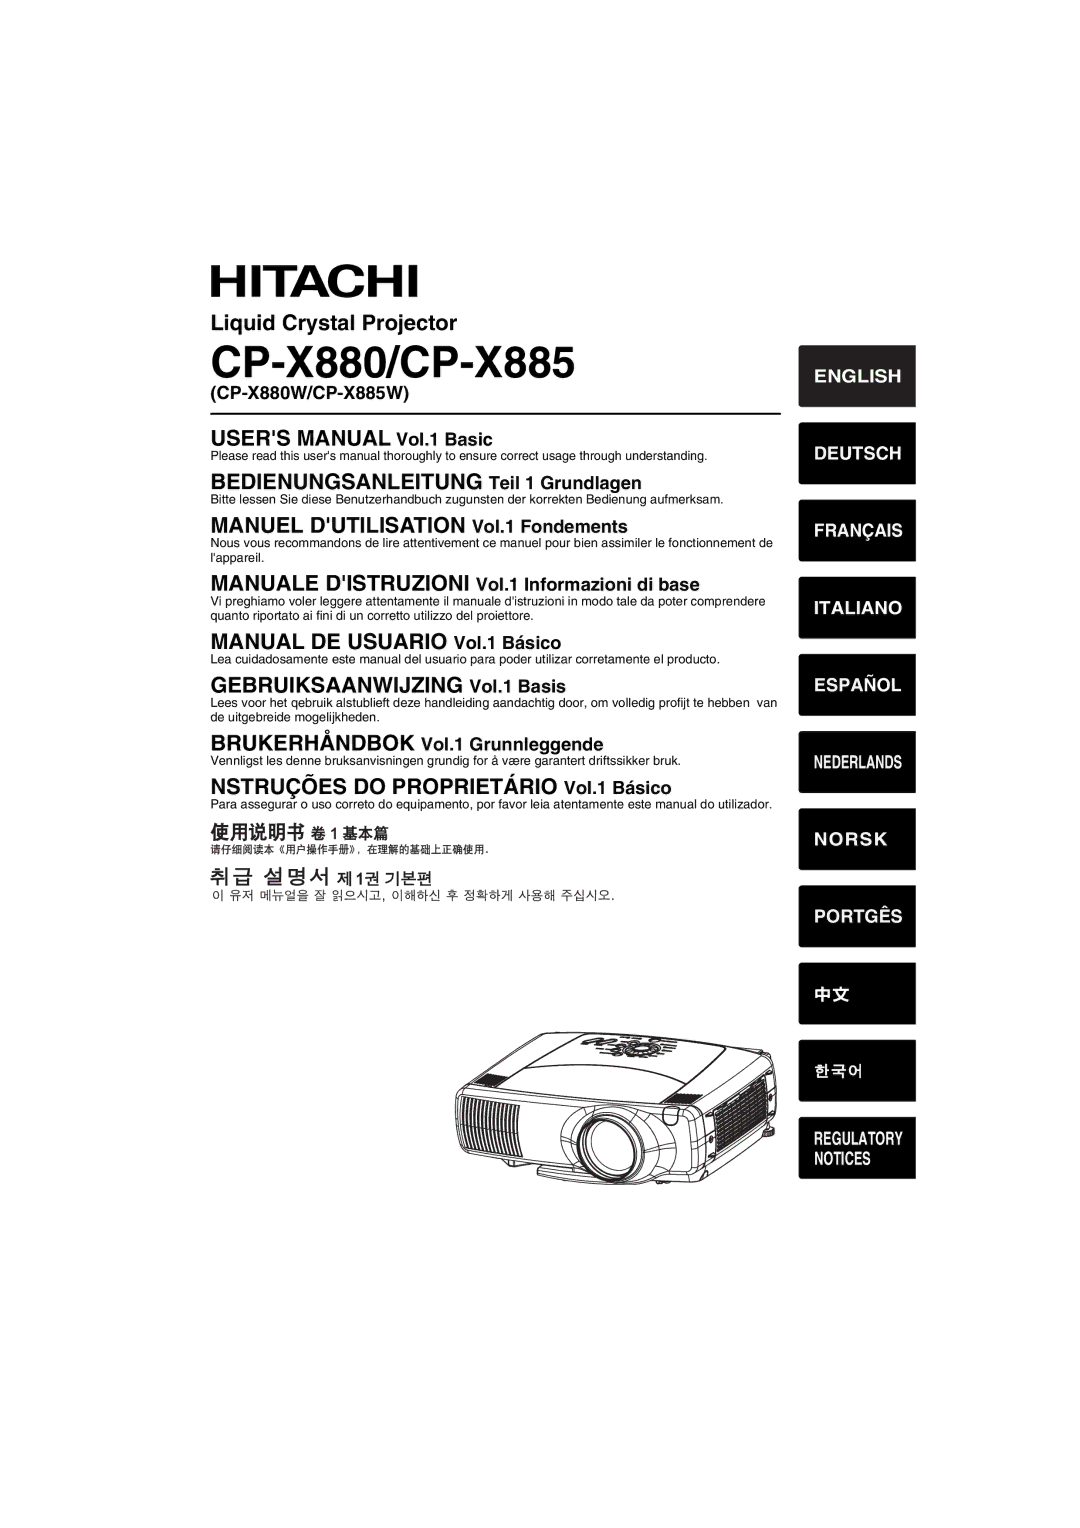 Hitachi user manual CP-X880W/CP-X885W, Manuale Distruzioni Vol.1 Informazioni di base 